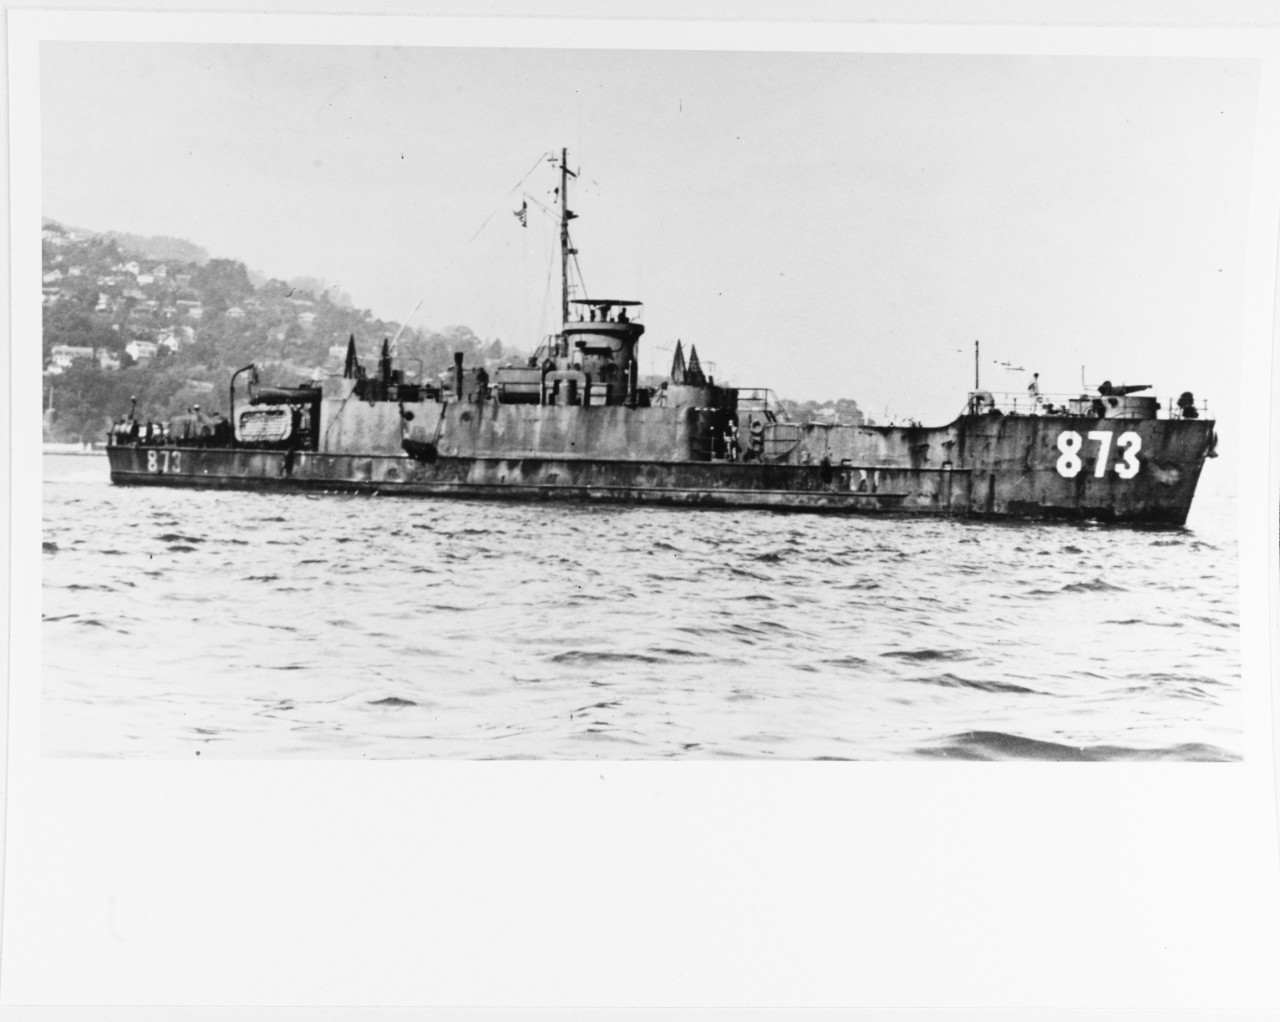 USS LCI-873